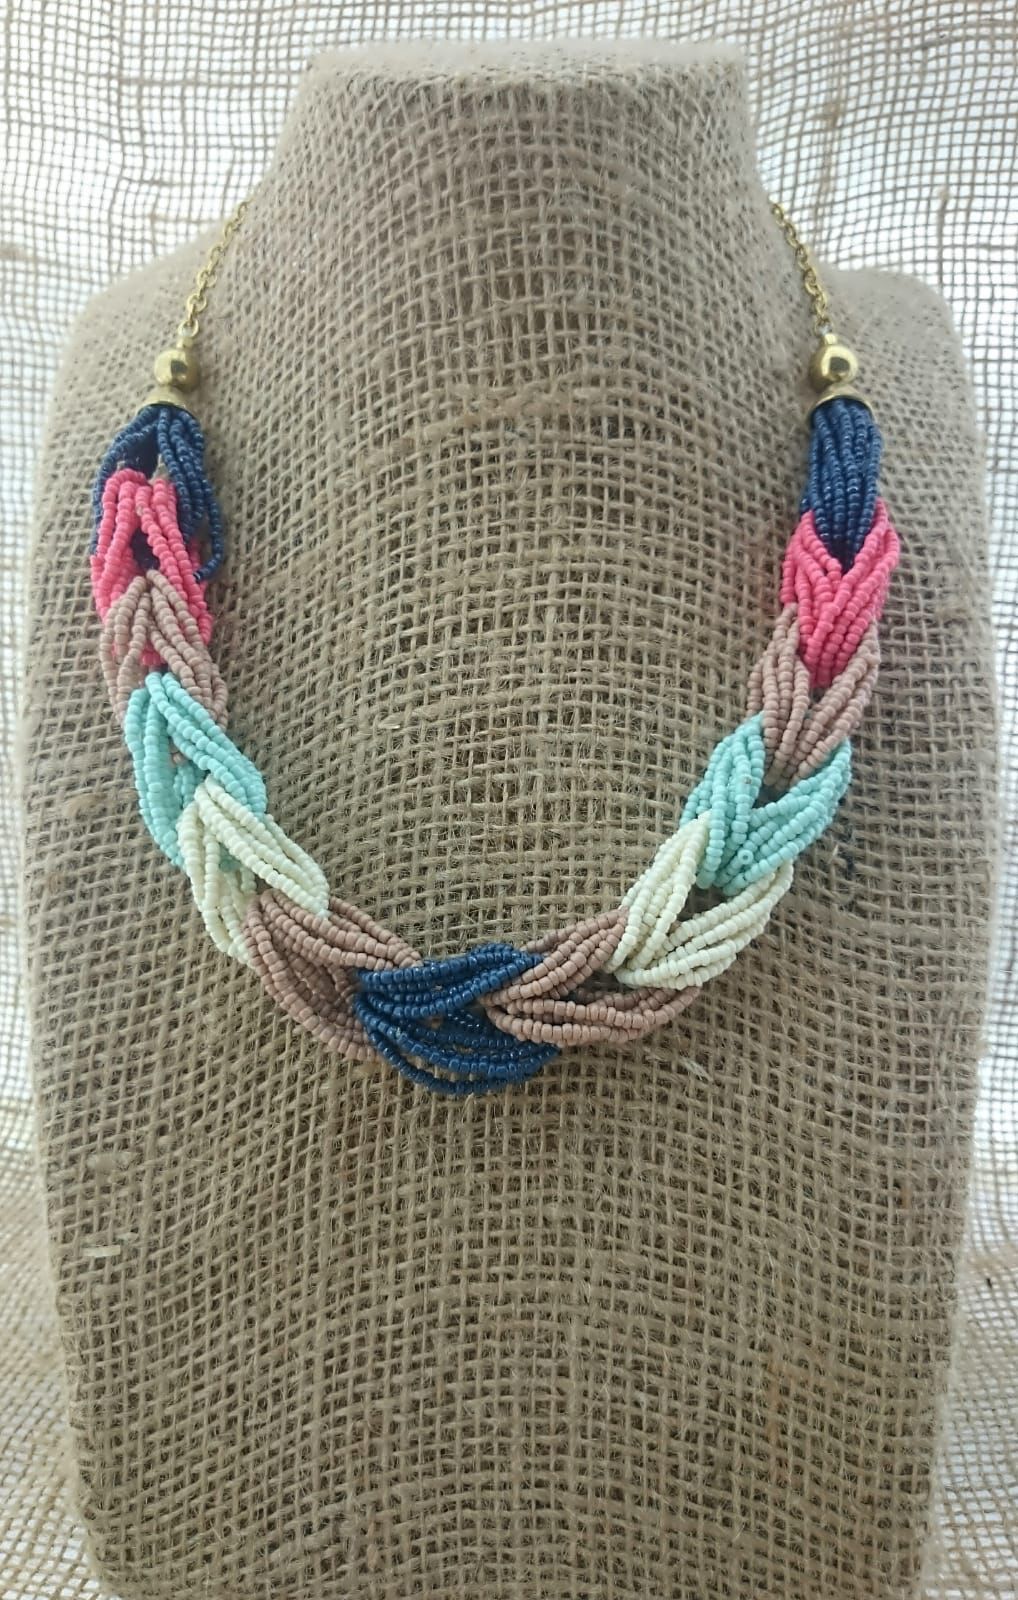 Multicolour Bead Necklace